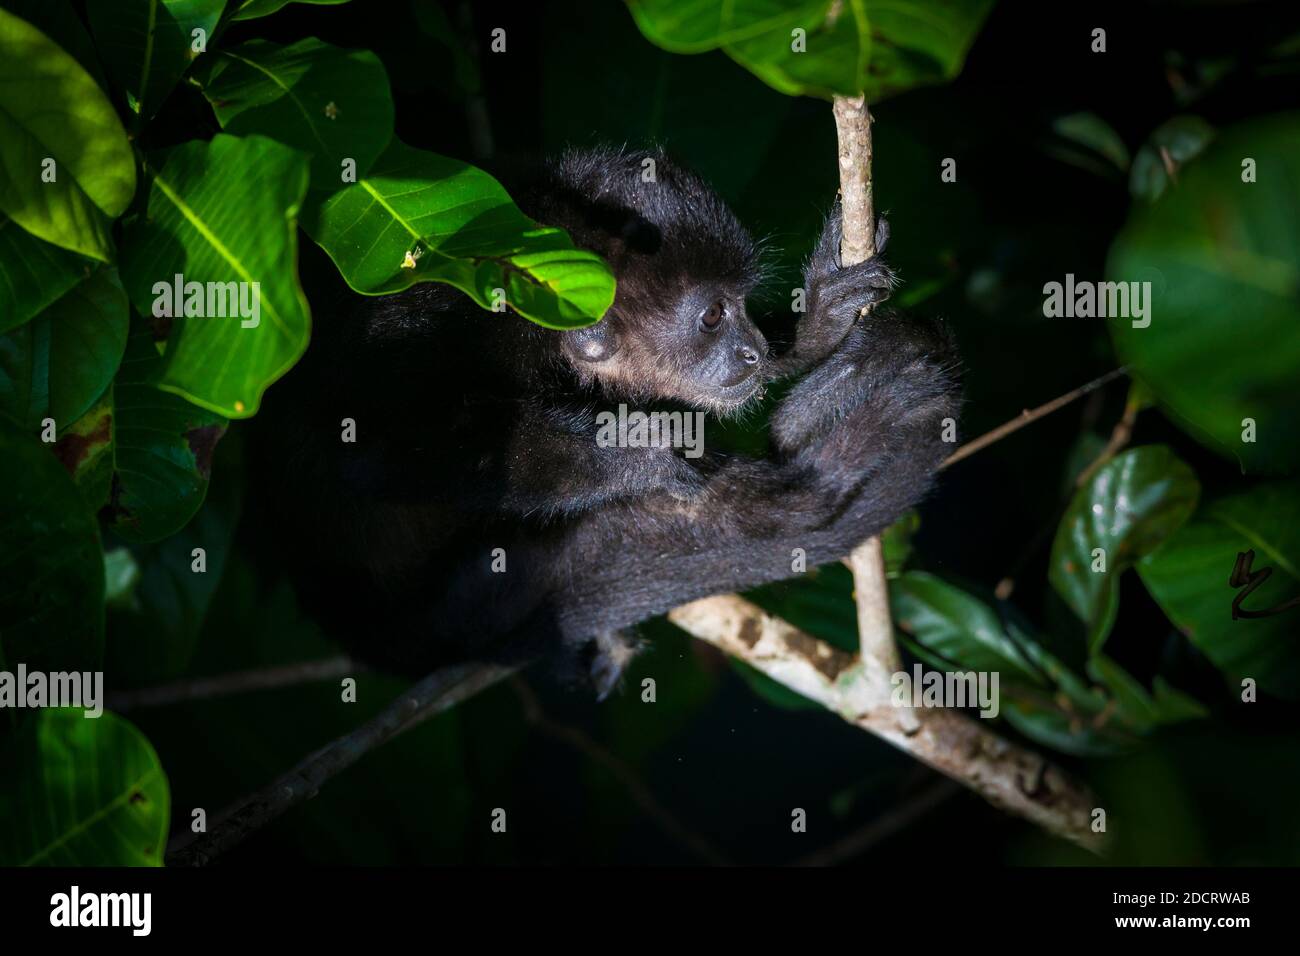 Die Tierwelt Panamas mit einem jungen Mantelbrüllaffen, Alouatta palliata, im Regenwald des Nationalparks Soberania, Republik Panama. Stockfoto